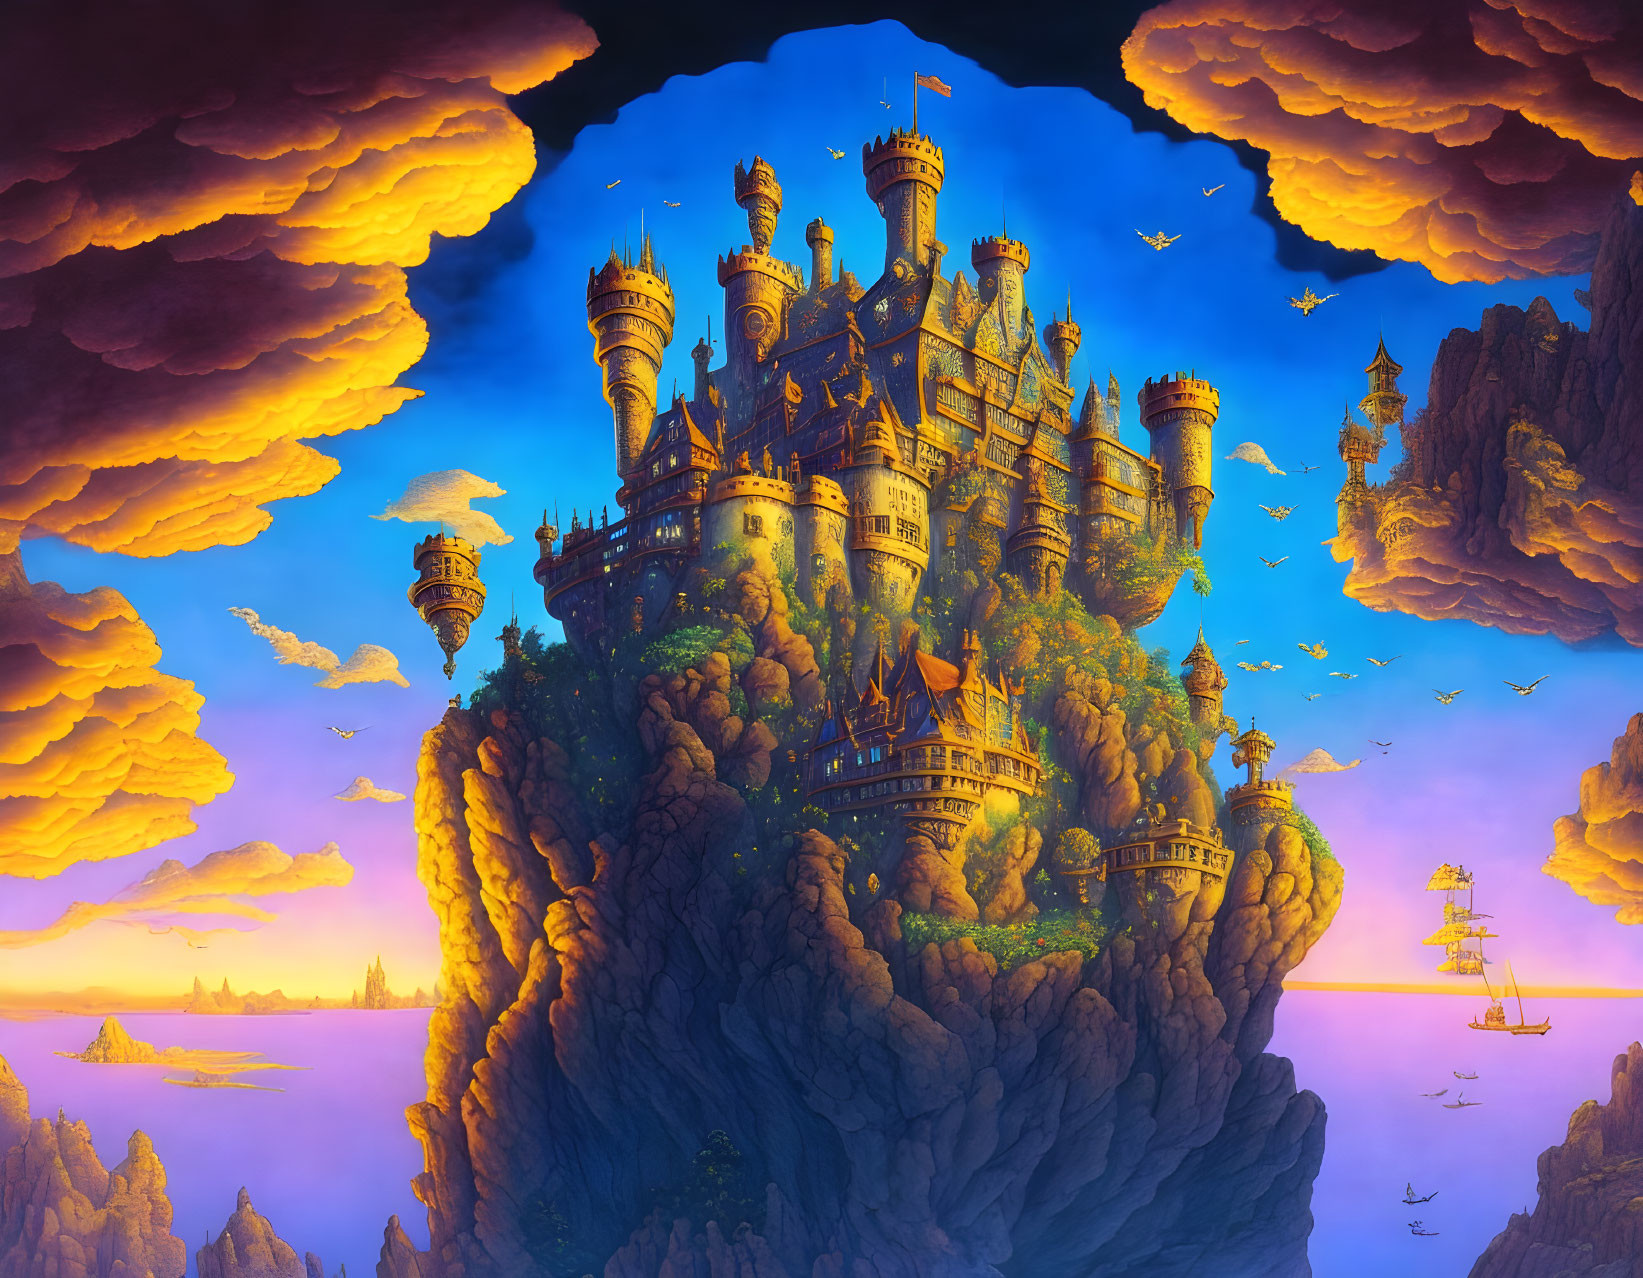 Fantastical castle on floating rock island with golden clouds, birds, ship at dusk